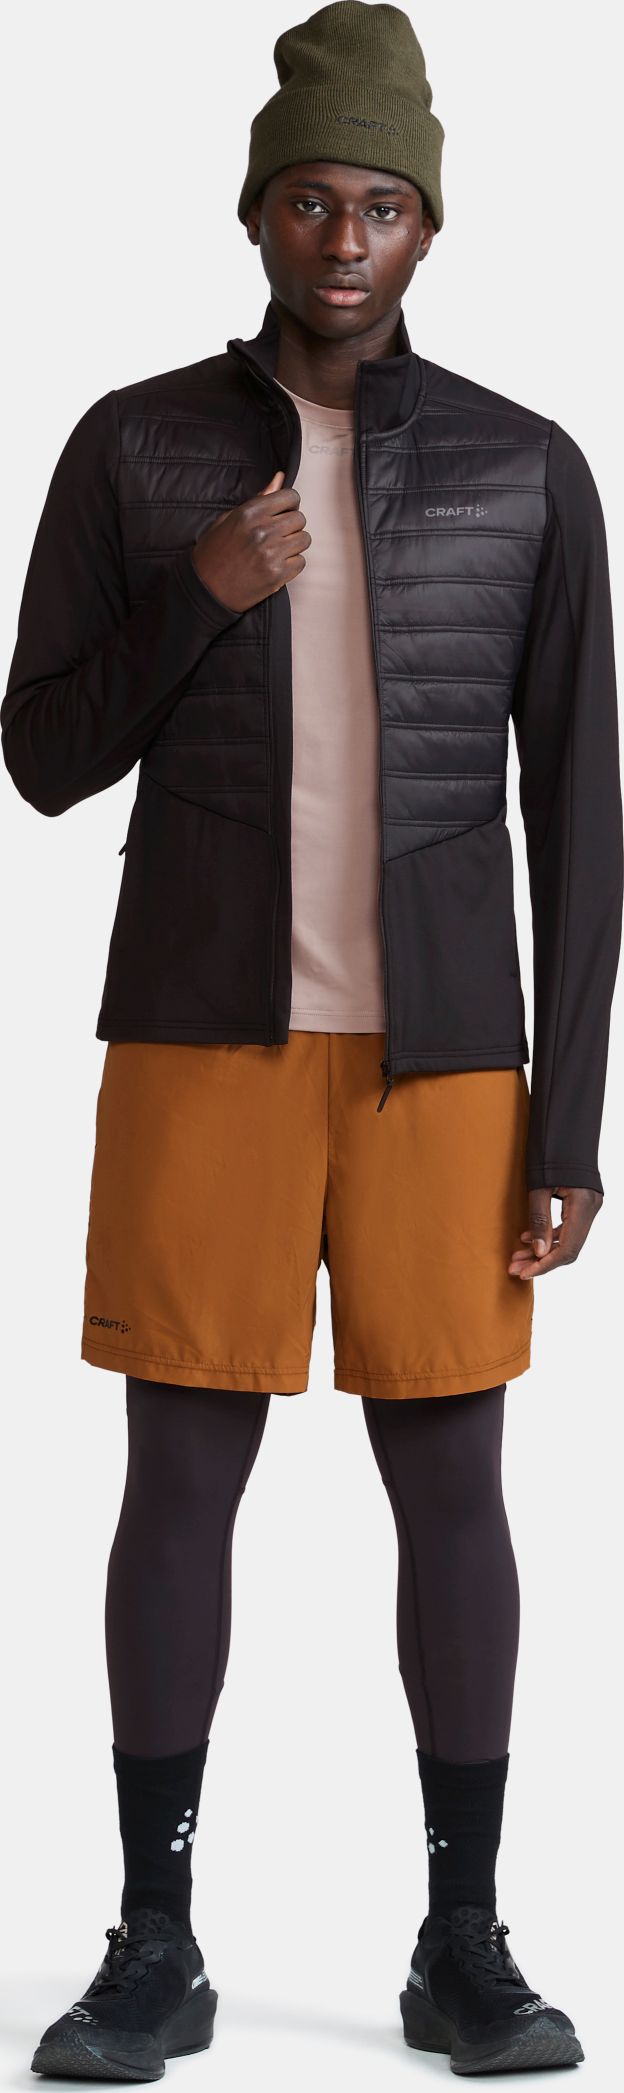 Men's Adv Essence Warm Jacket 2 Black Craft